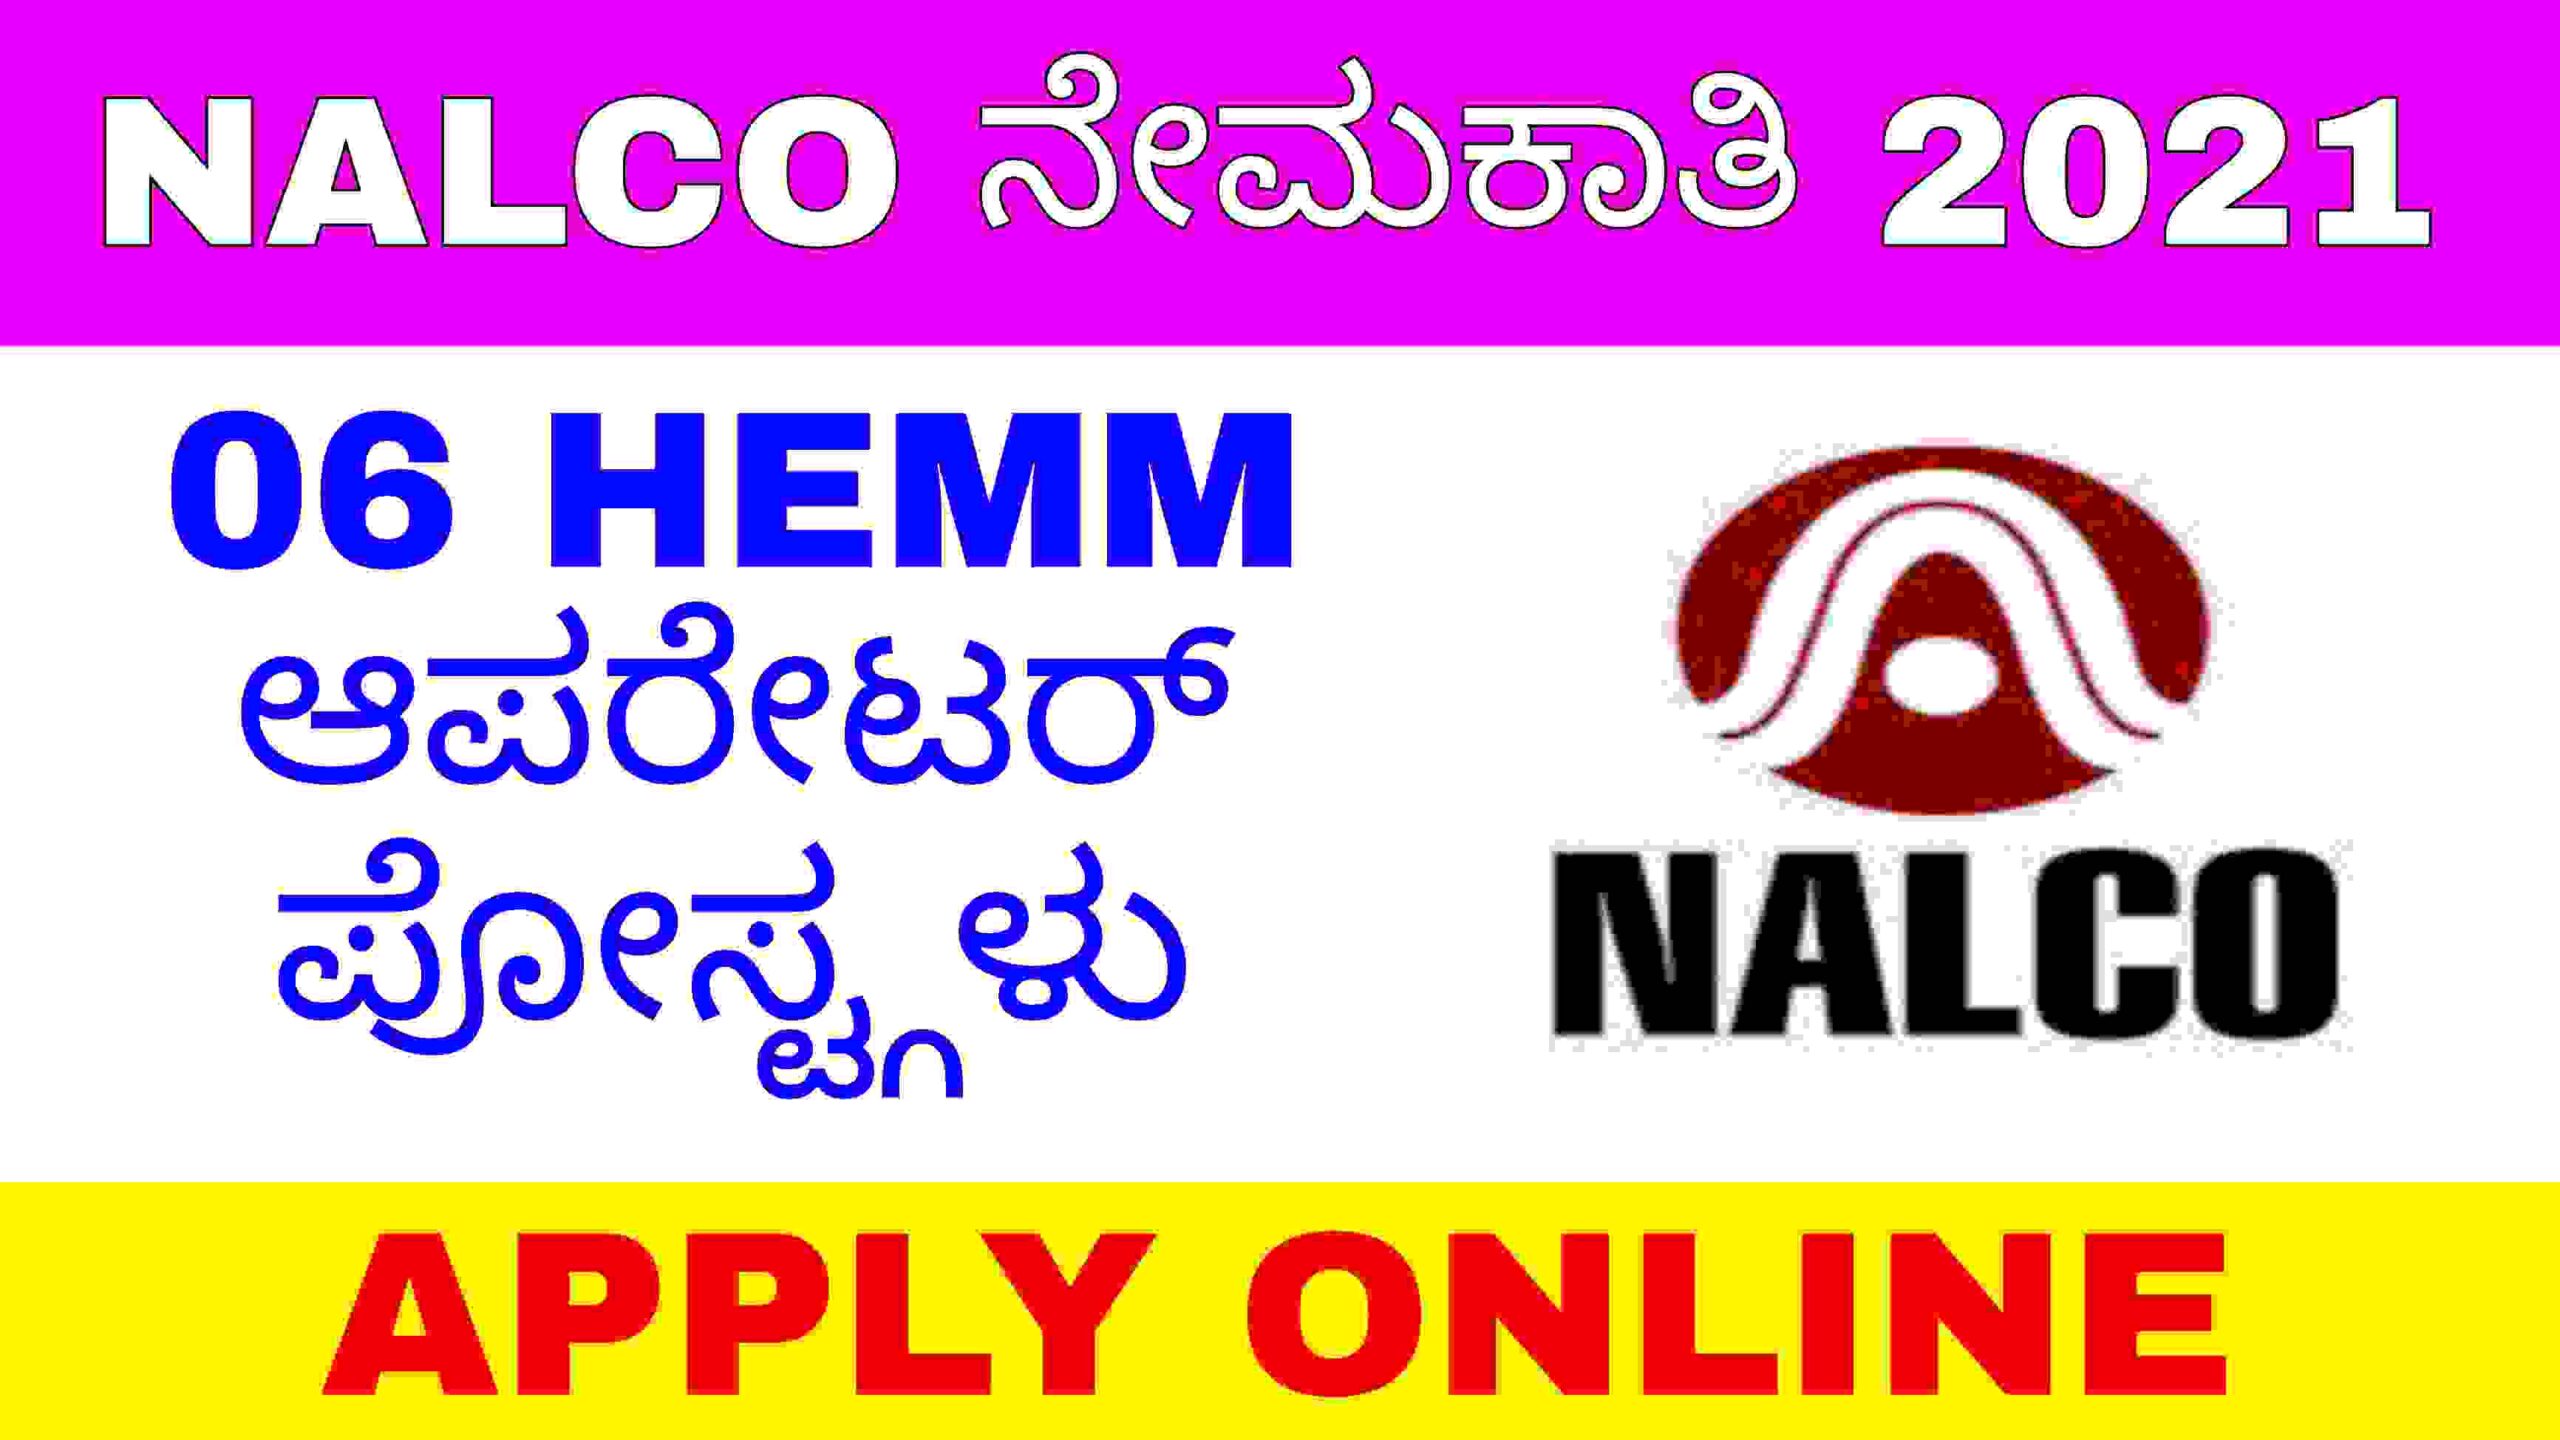 NALCO Recruitment 2021- 06 HMM ಆಪರೇಟರ್ ಹುದ್ದೆಗಳಿಗೆ ಅರ್ಜಿ ಆಹ್ವಾನ.